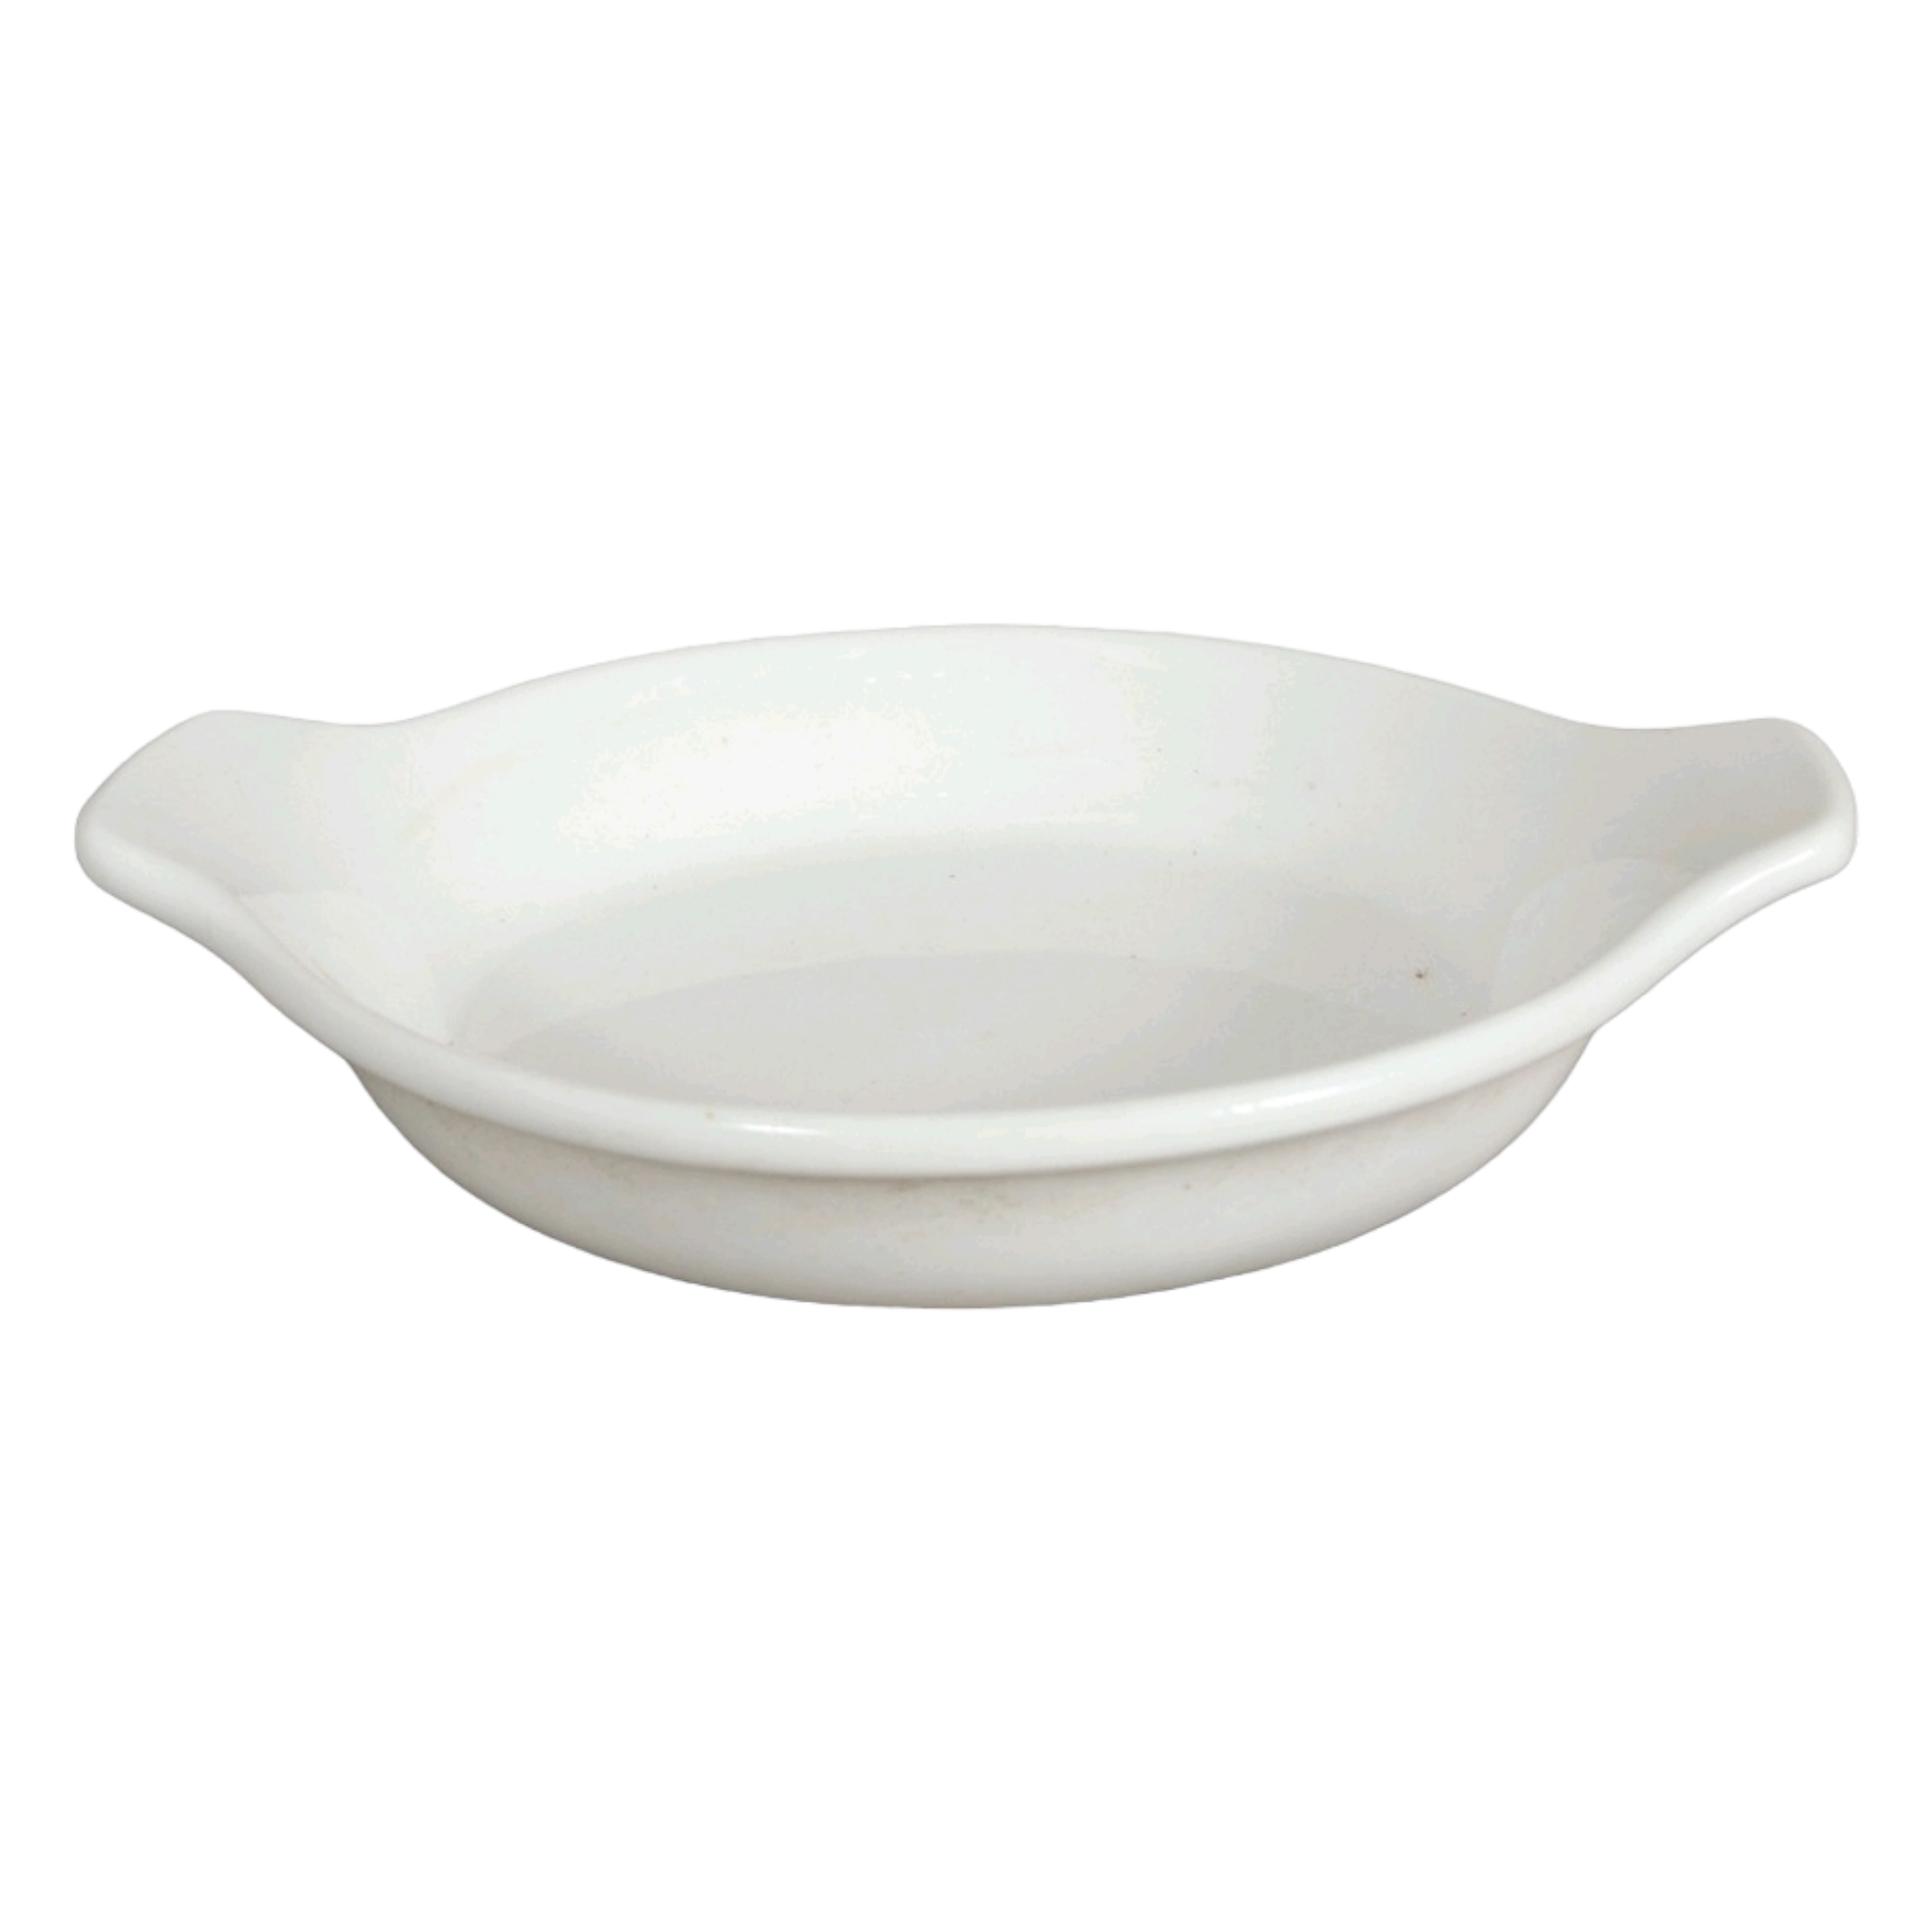 Ceramic Round Eared Dish Plate 7.25Inch 34852